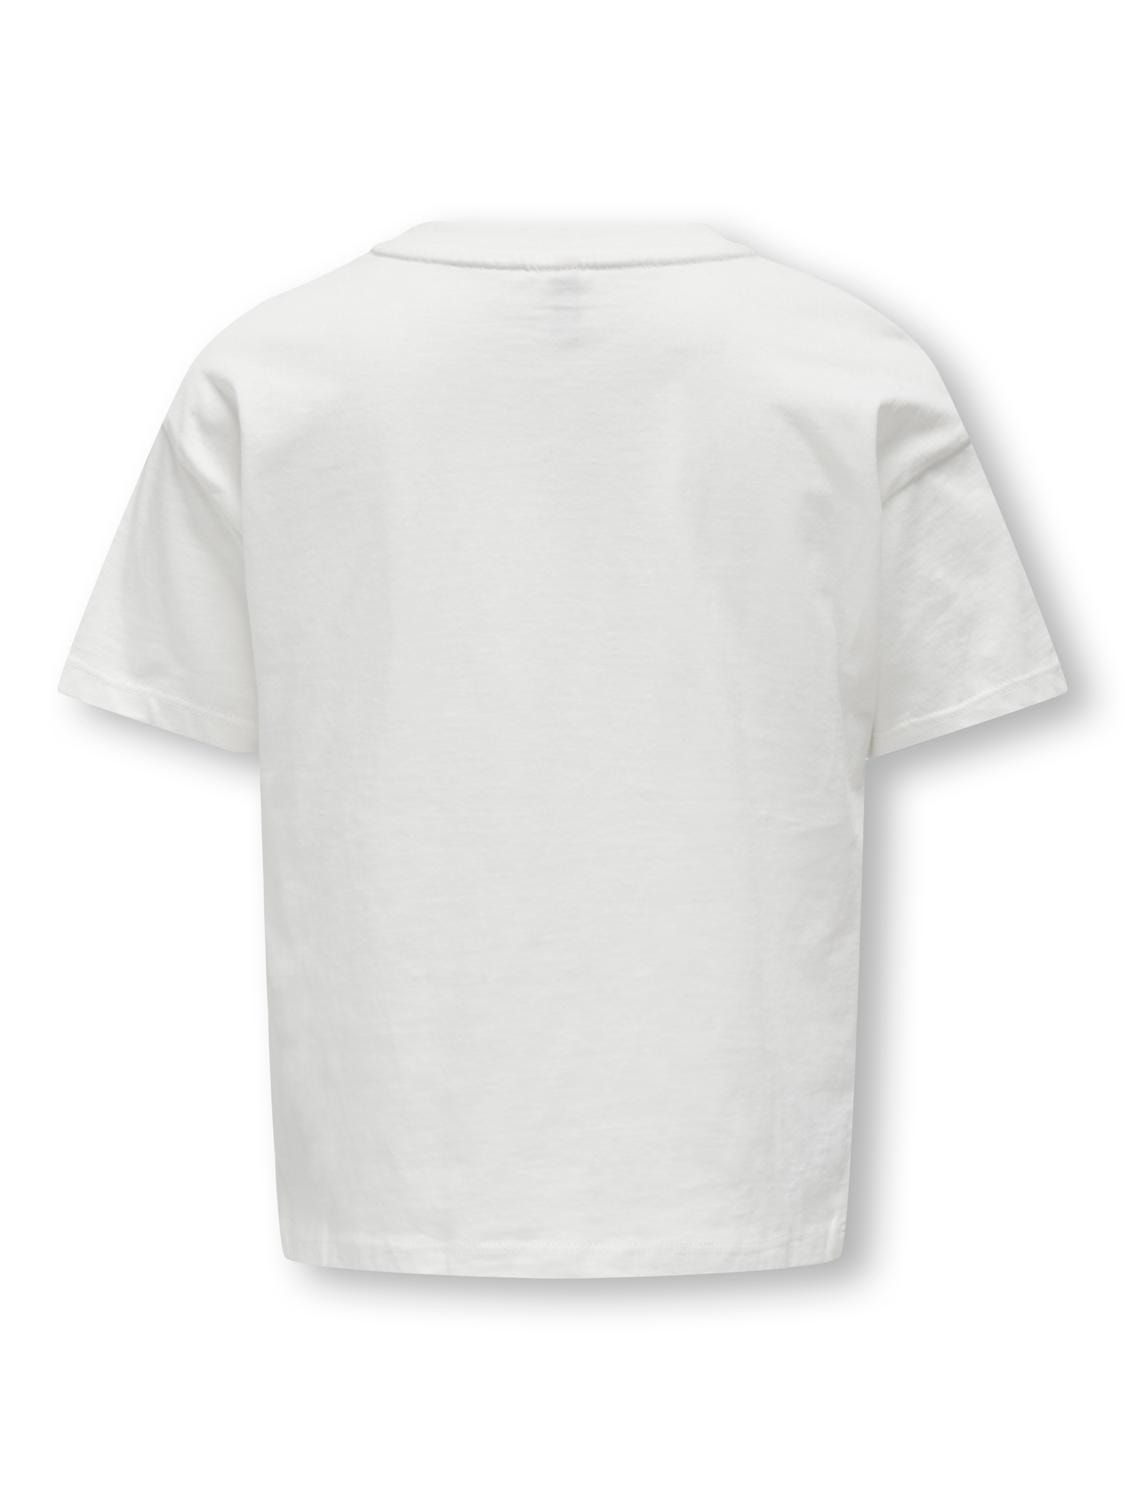 ONLY Camisetas Corte regular Cuello redondo Hombros caídos -Cloud Dancer - 15320438